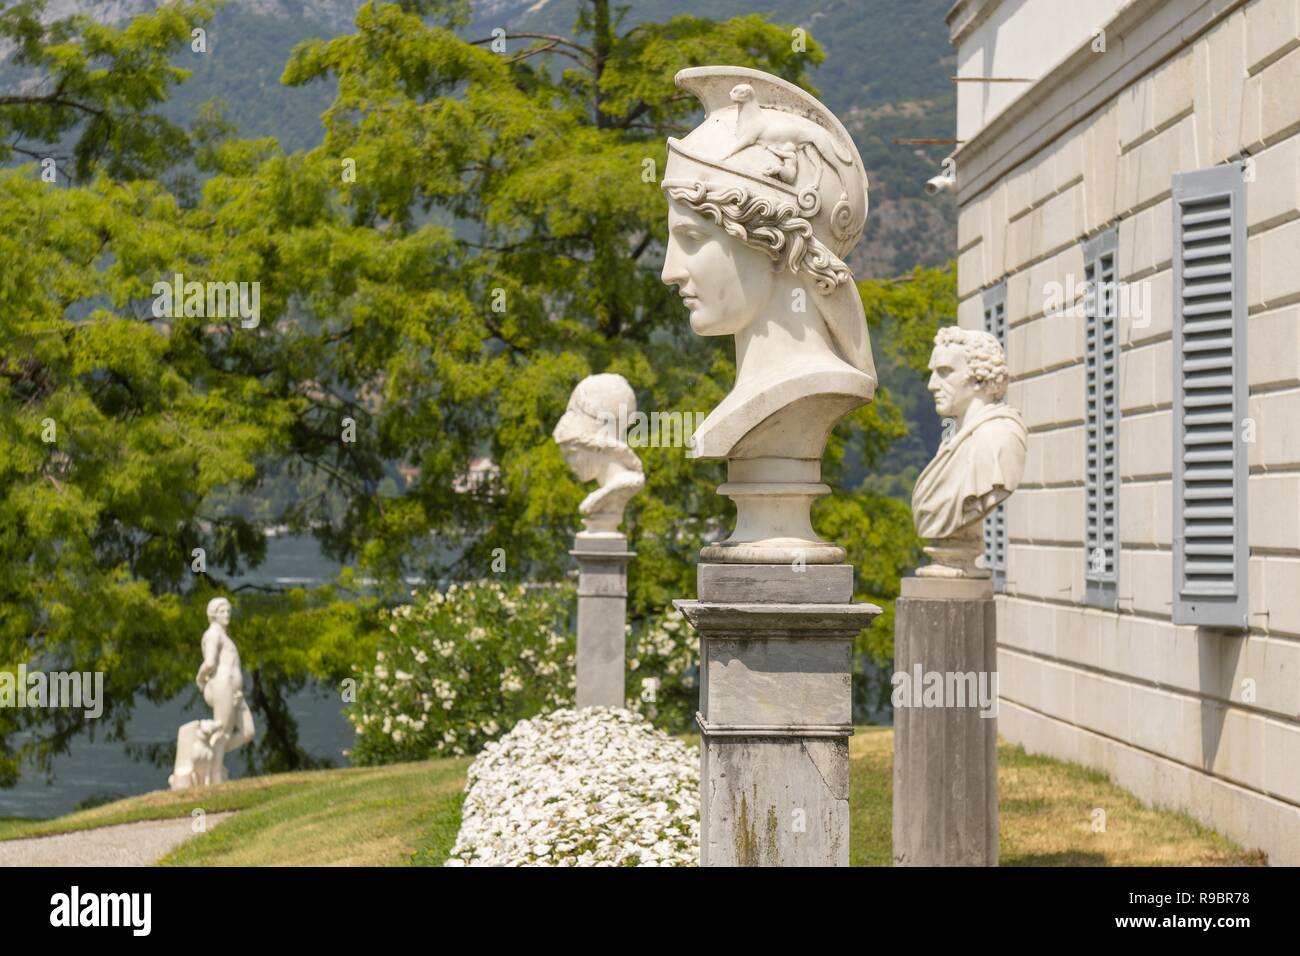 Herm of Athena in italian garden of Villa Melzi in Bellagio, Italy. Stock Photo